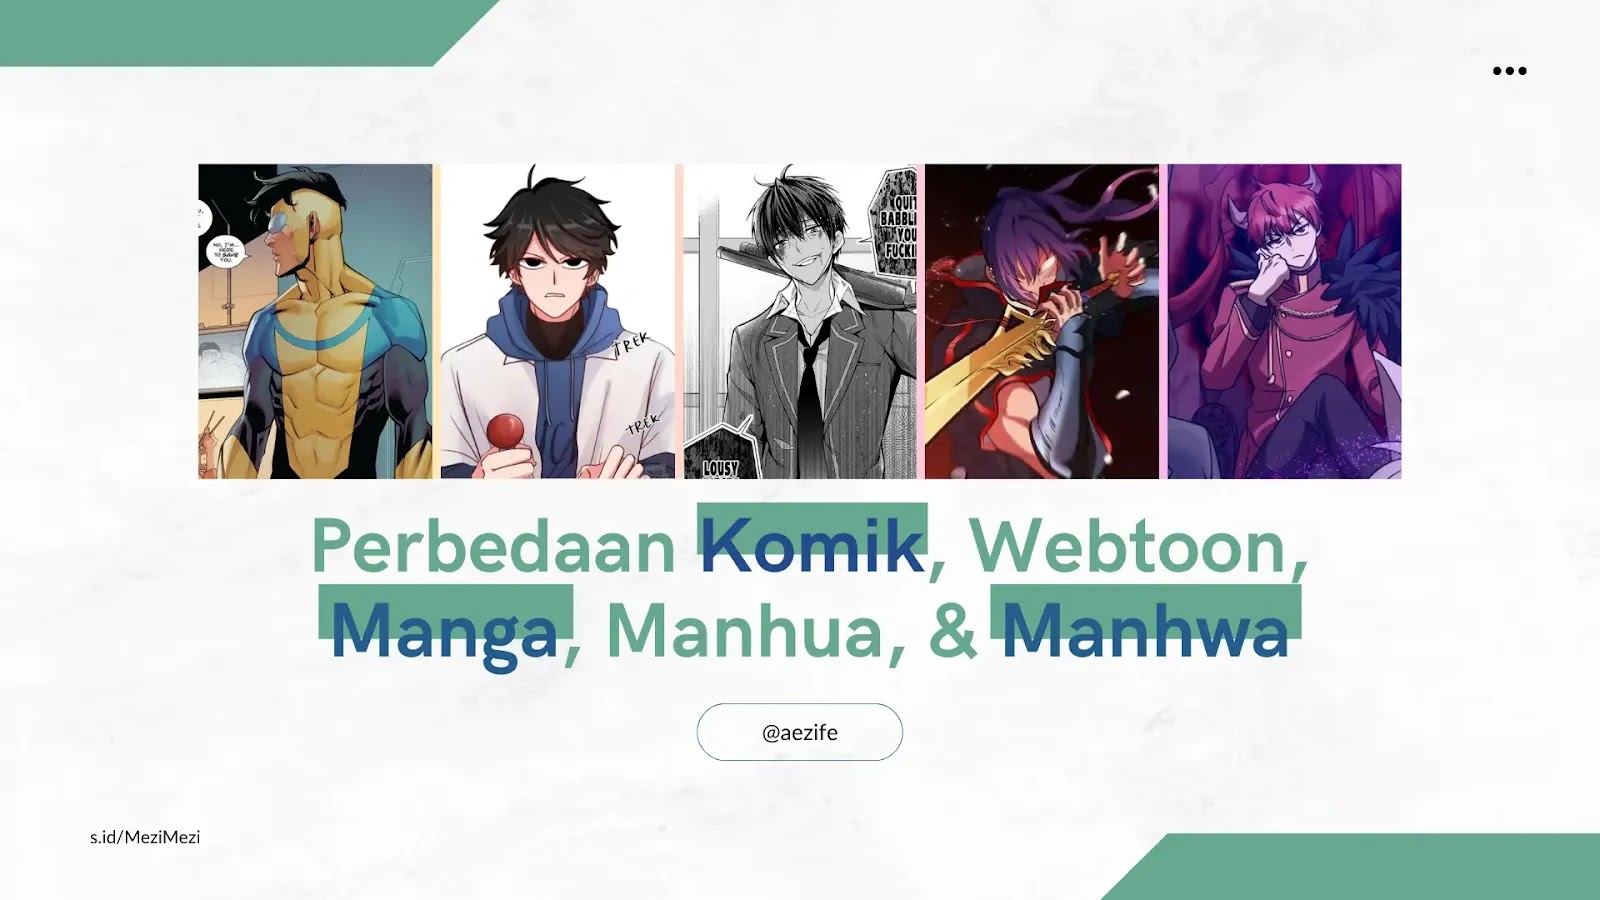 Perbedaan Komik, Webtoon, Manga, Manhua, dan Manhwa